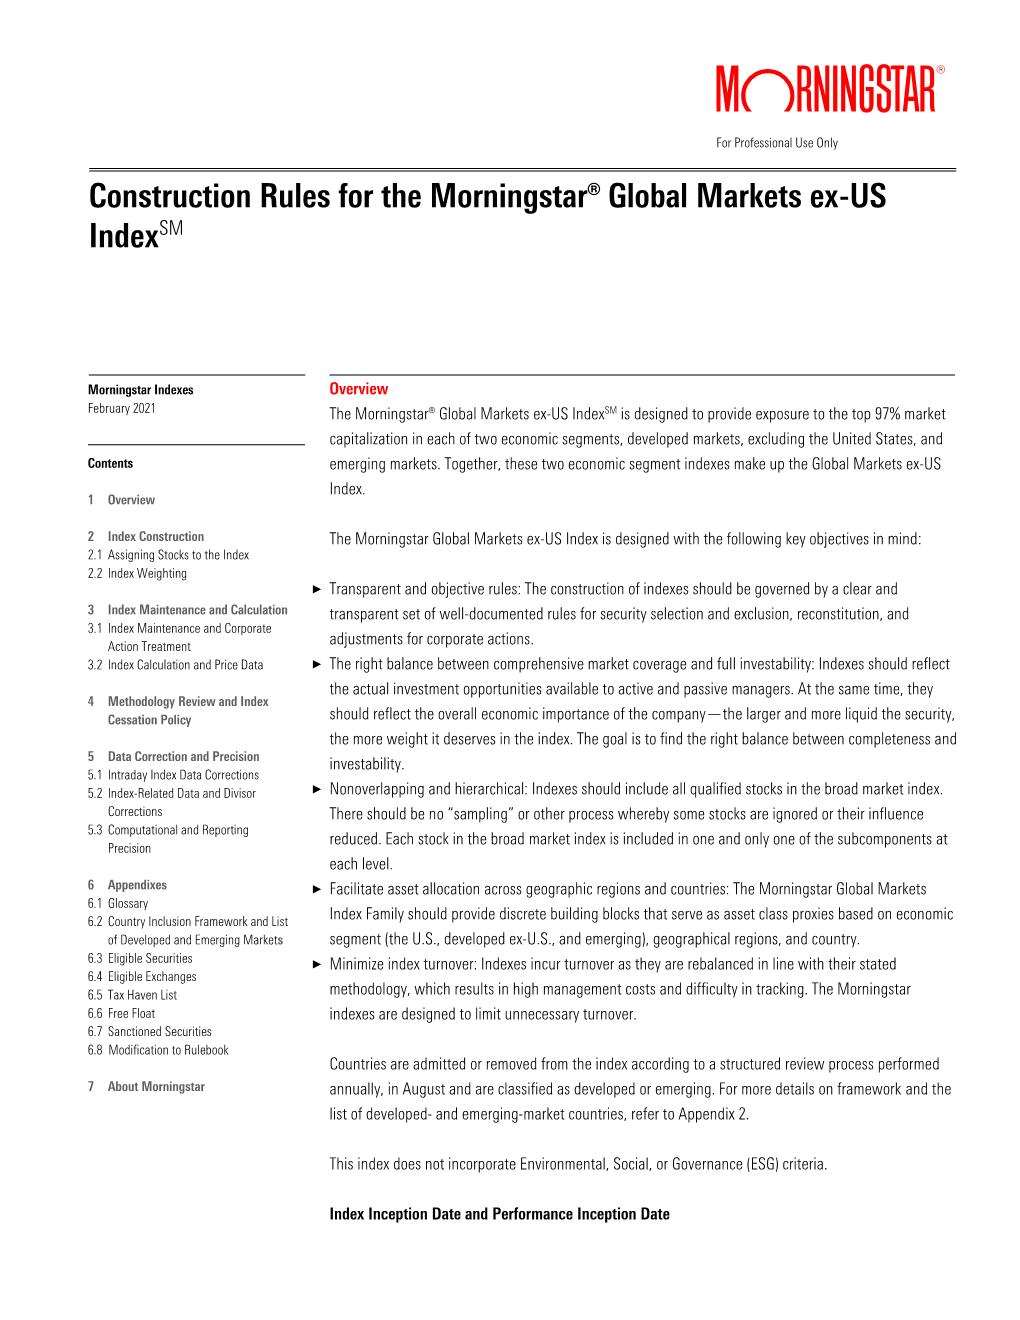 Construction Rules for the Morningstar® Global Markets Ex-US Indexsm